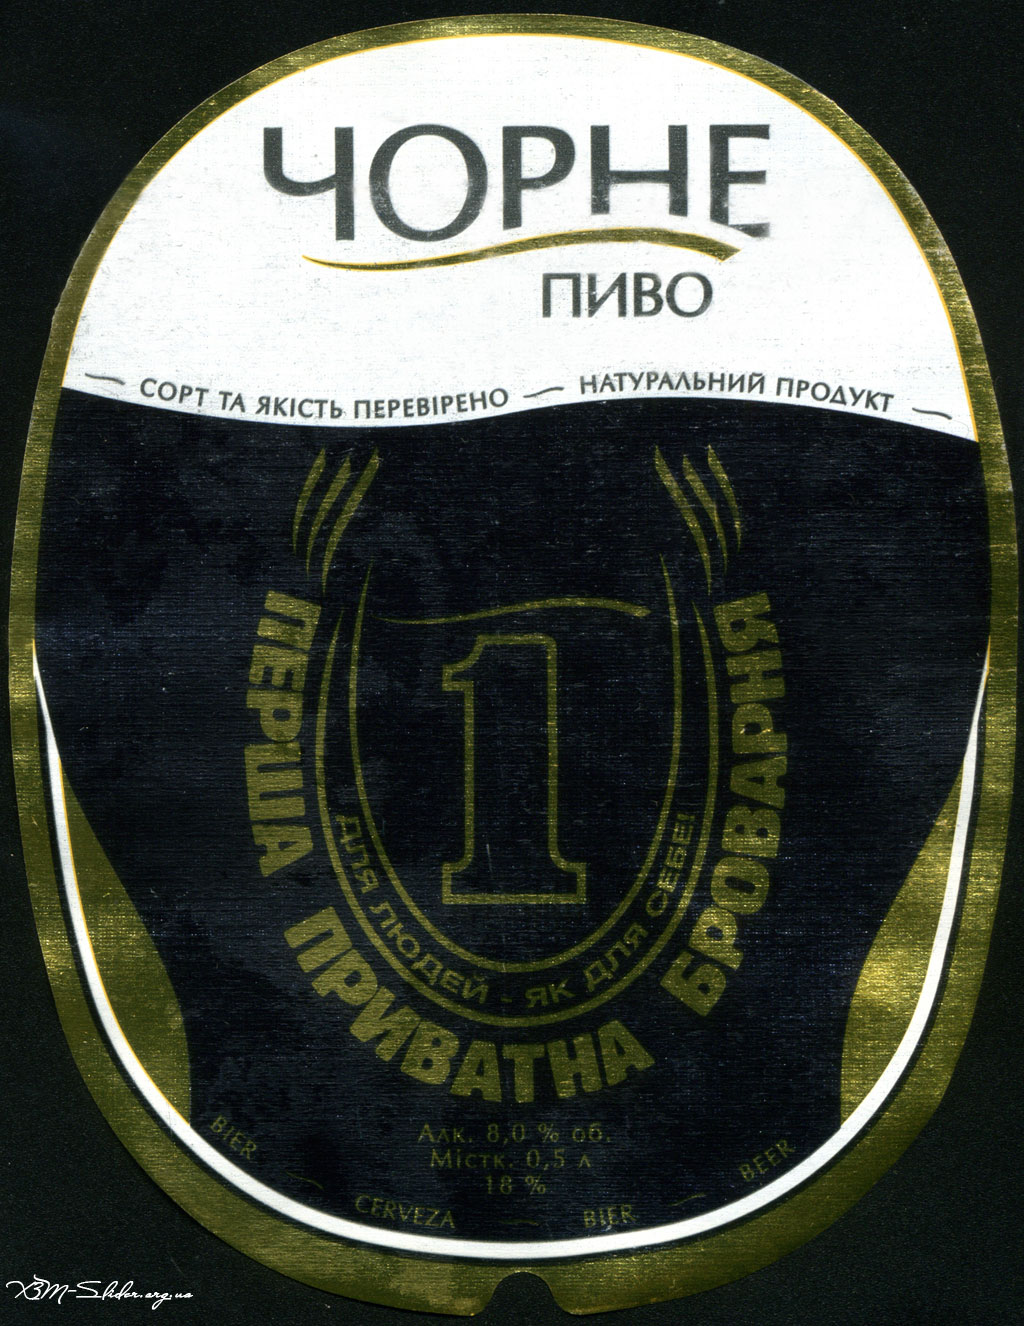 Перша Приватна Броварня - Чорне пиво (Старая єтикетка)